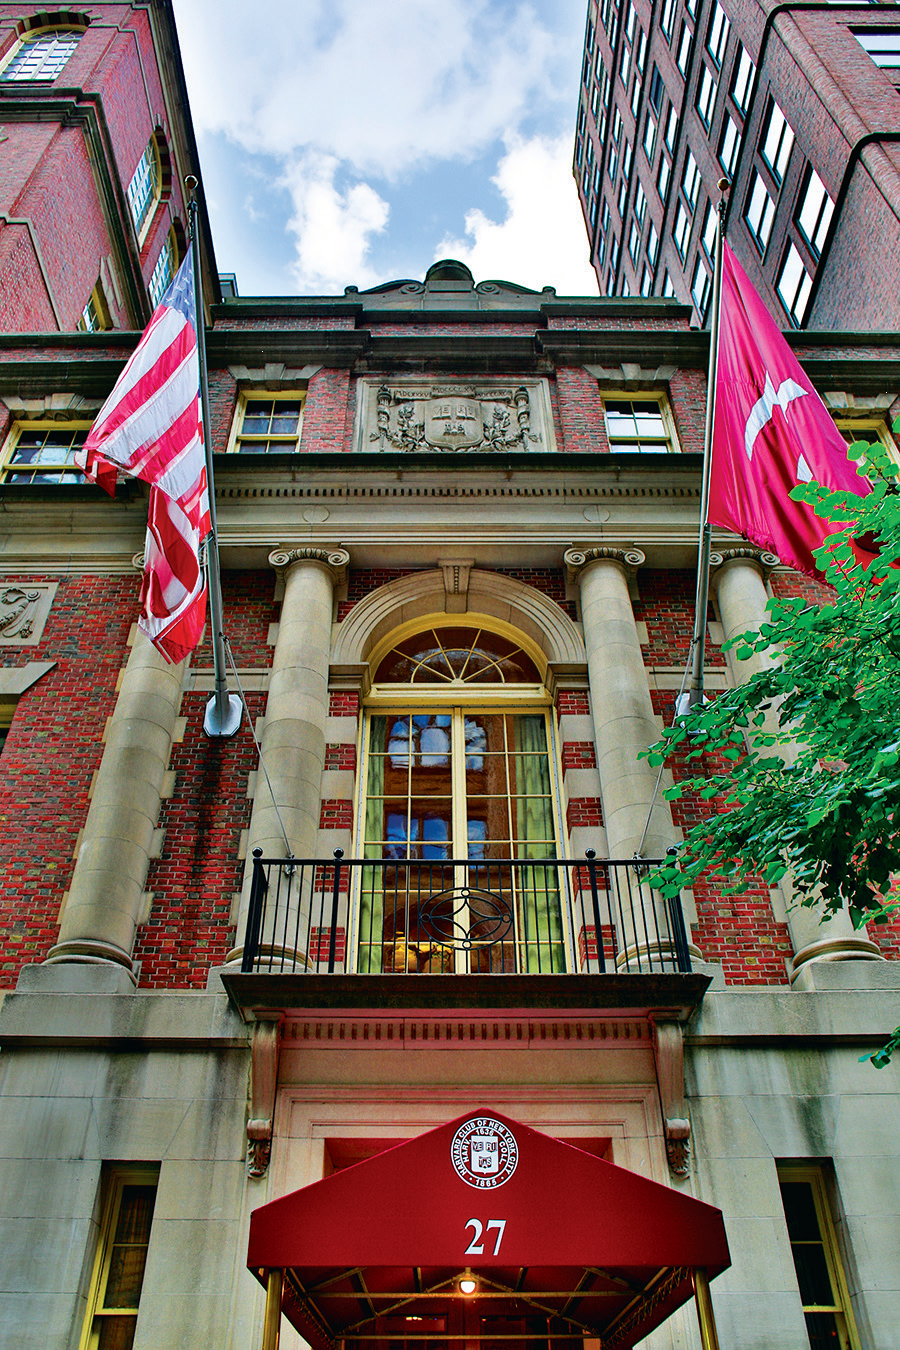 Harvard Club of Victoria